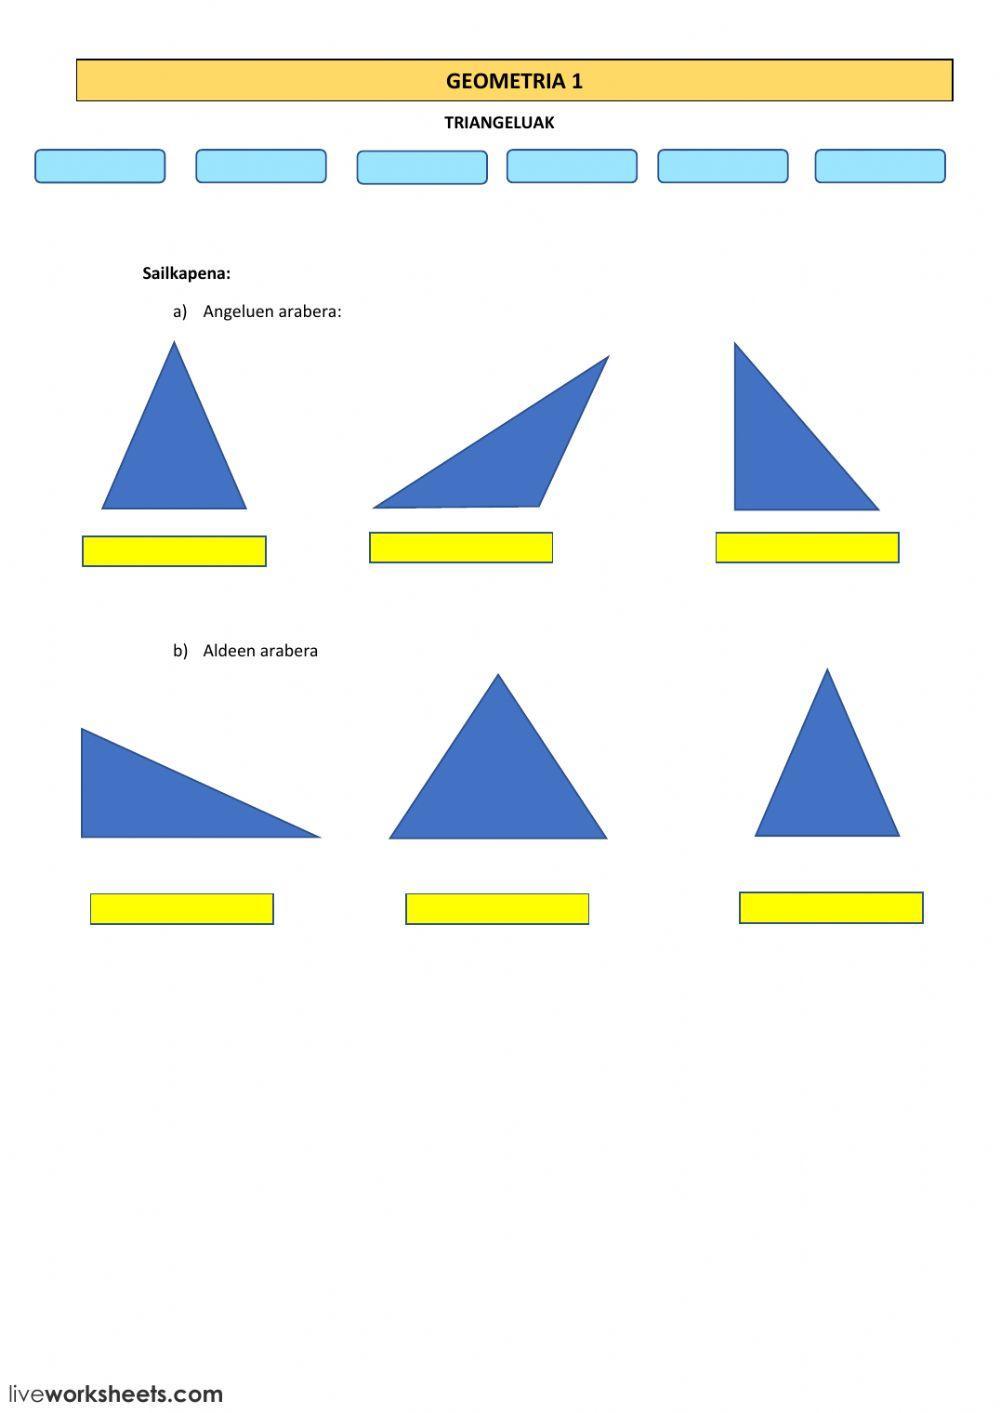 Geometria 1: Triangeluak